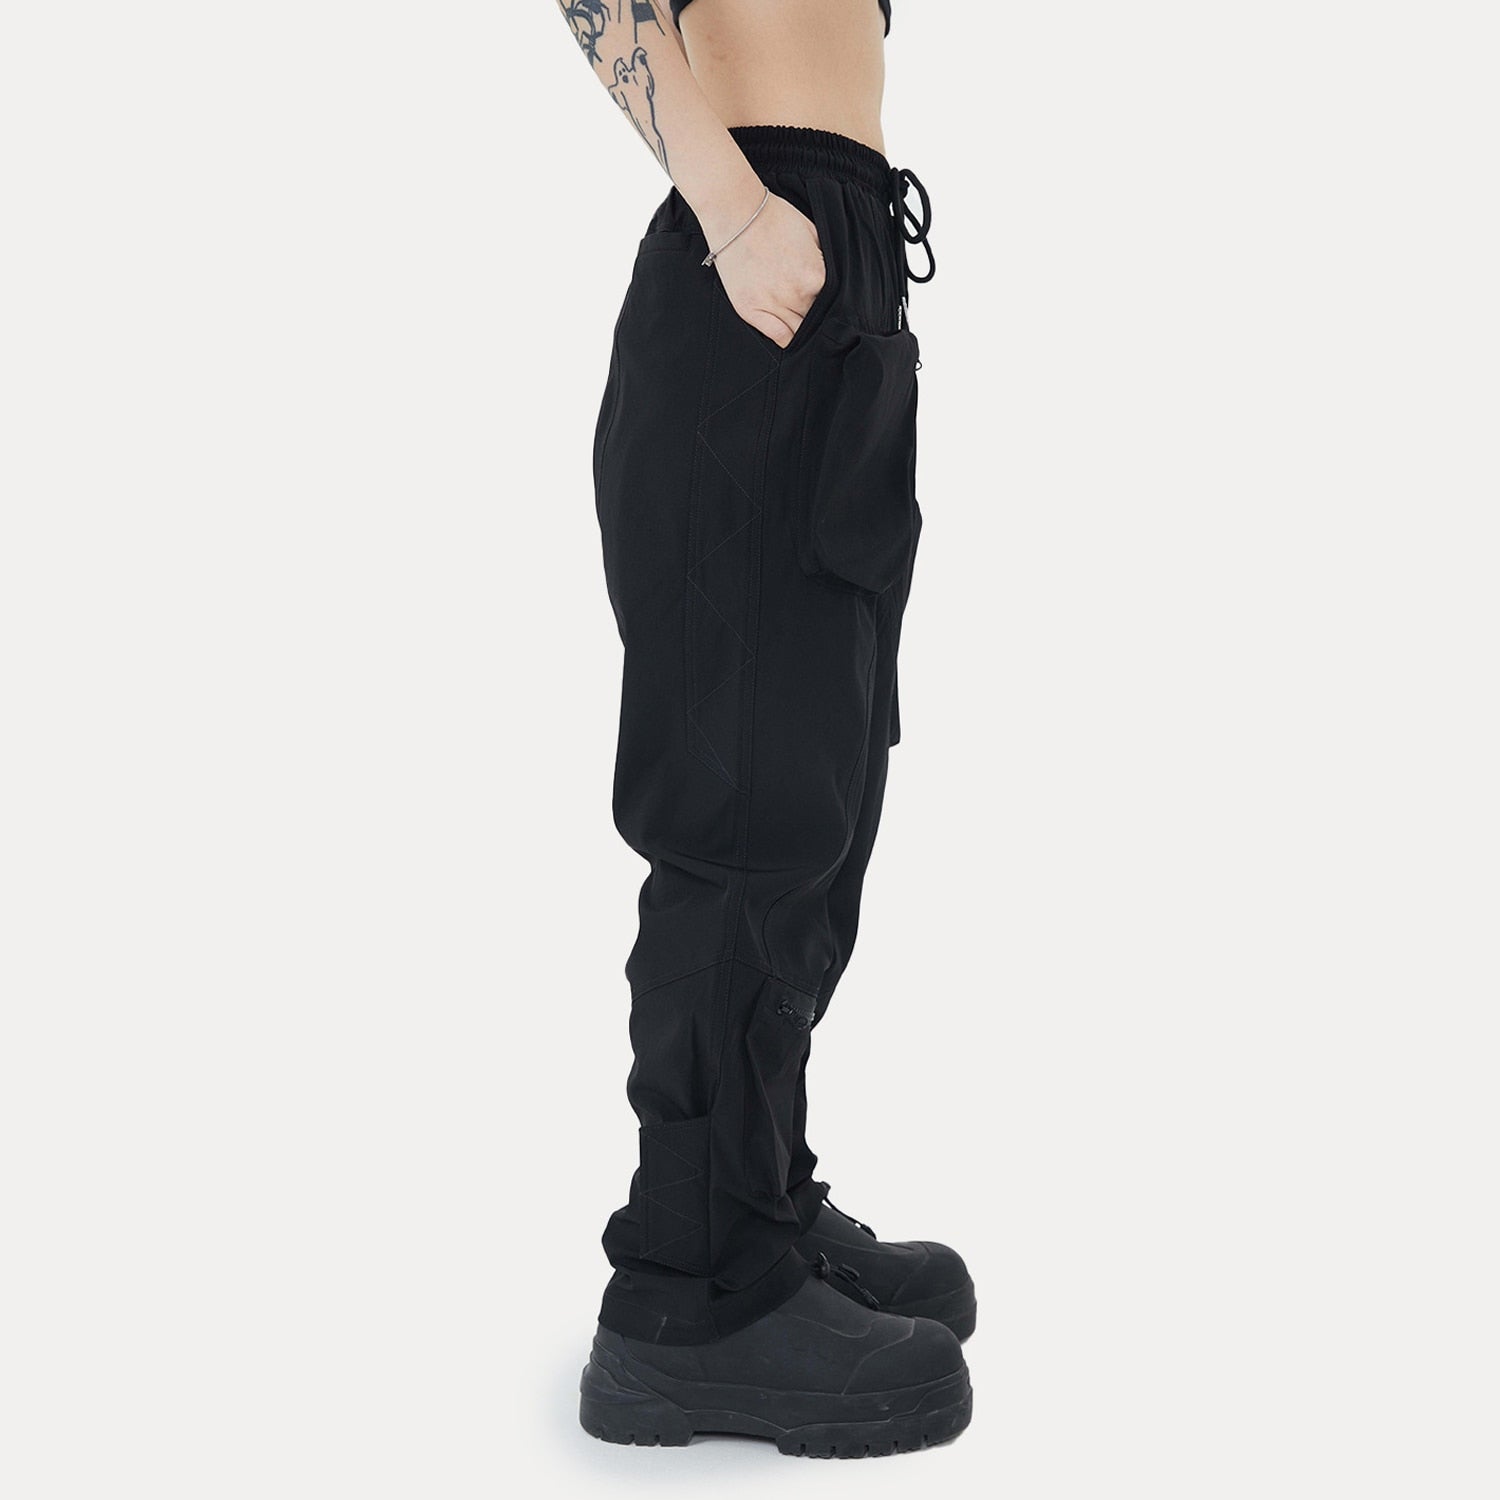 Hip Hop Cargo Pants Autumn Functional Multi Pockets Joggers Trousers for Men Women Elastic Waist Fashion Pant